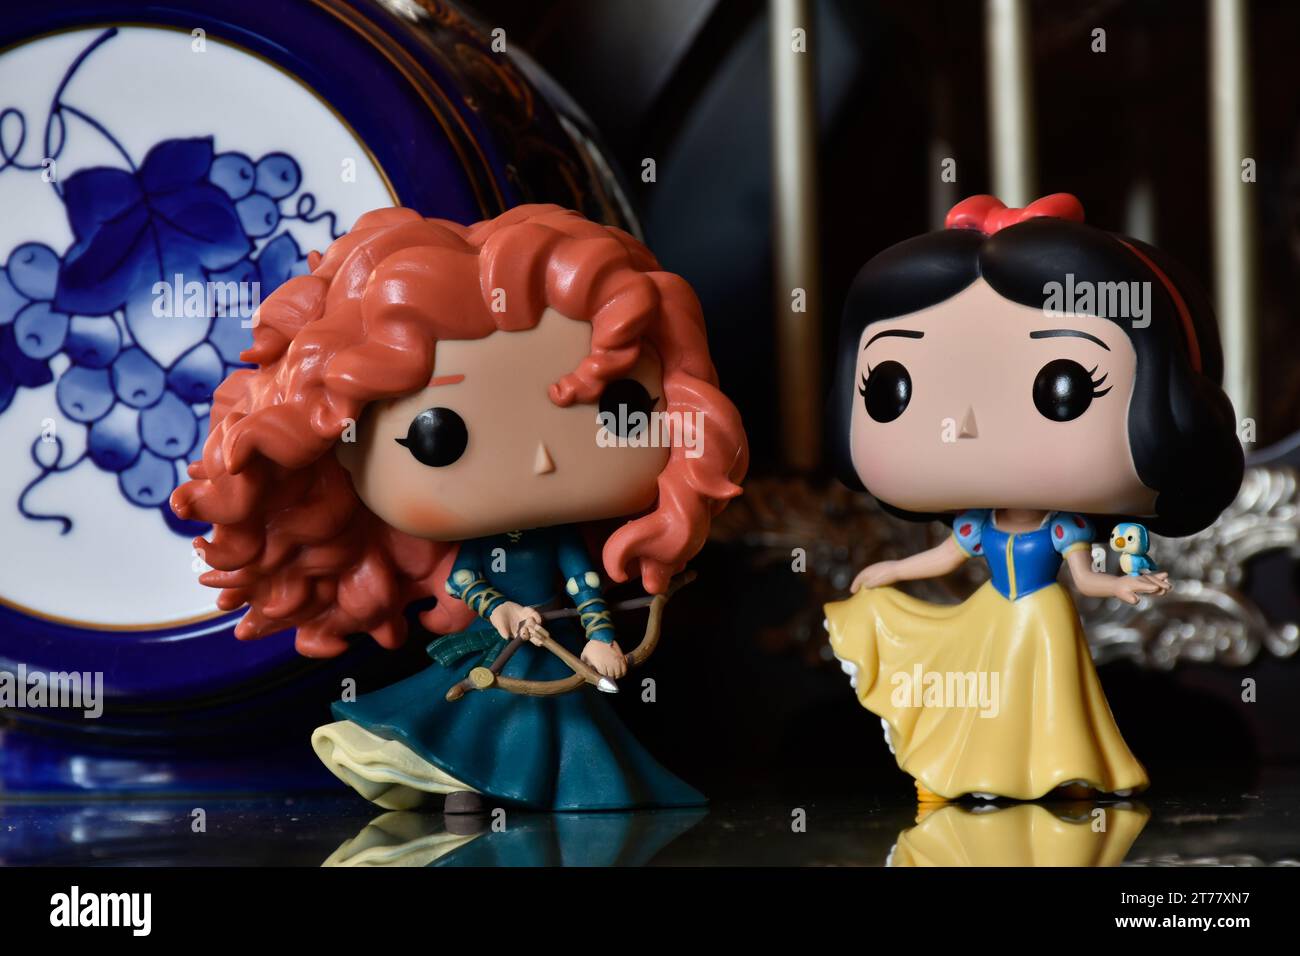 Funko Pop action figures of Disney princesses Merida (Brave) and Snow White. Medieval castle, fabulous kingdom, porcelain blue keg with pattern. Stock Photo